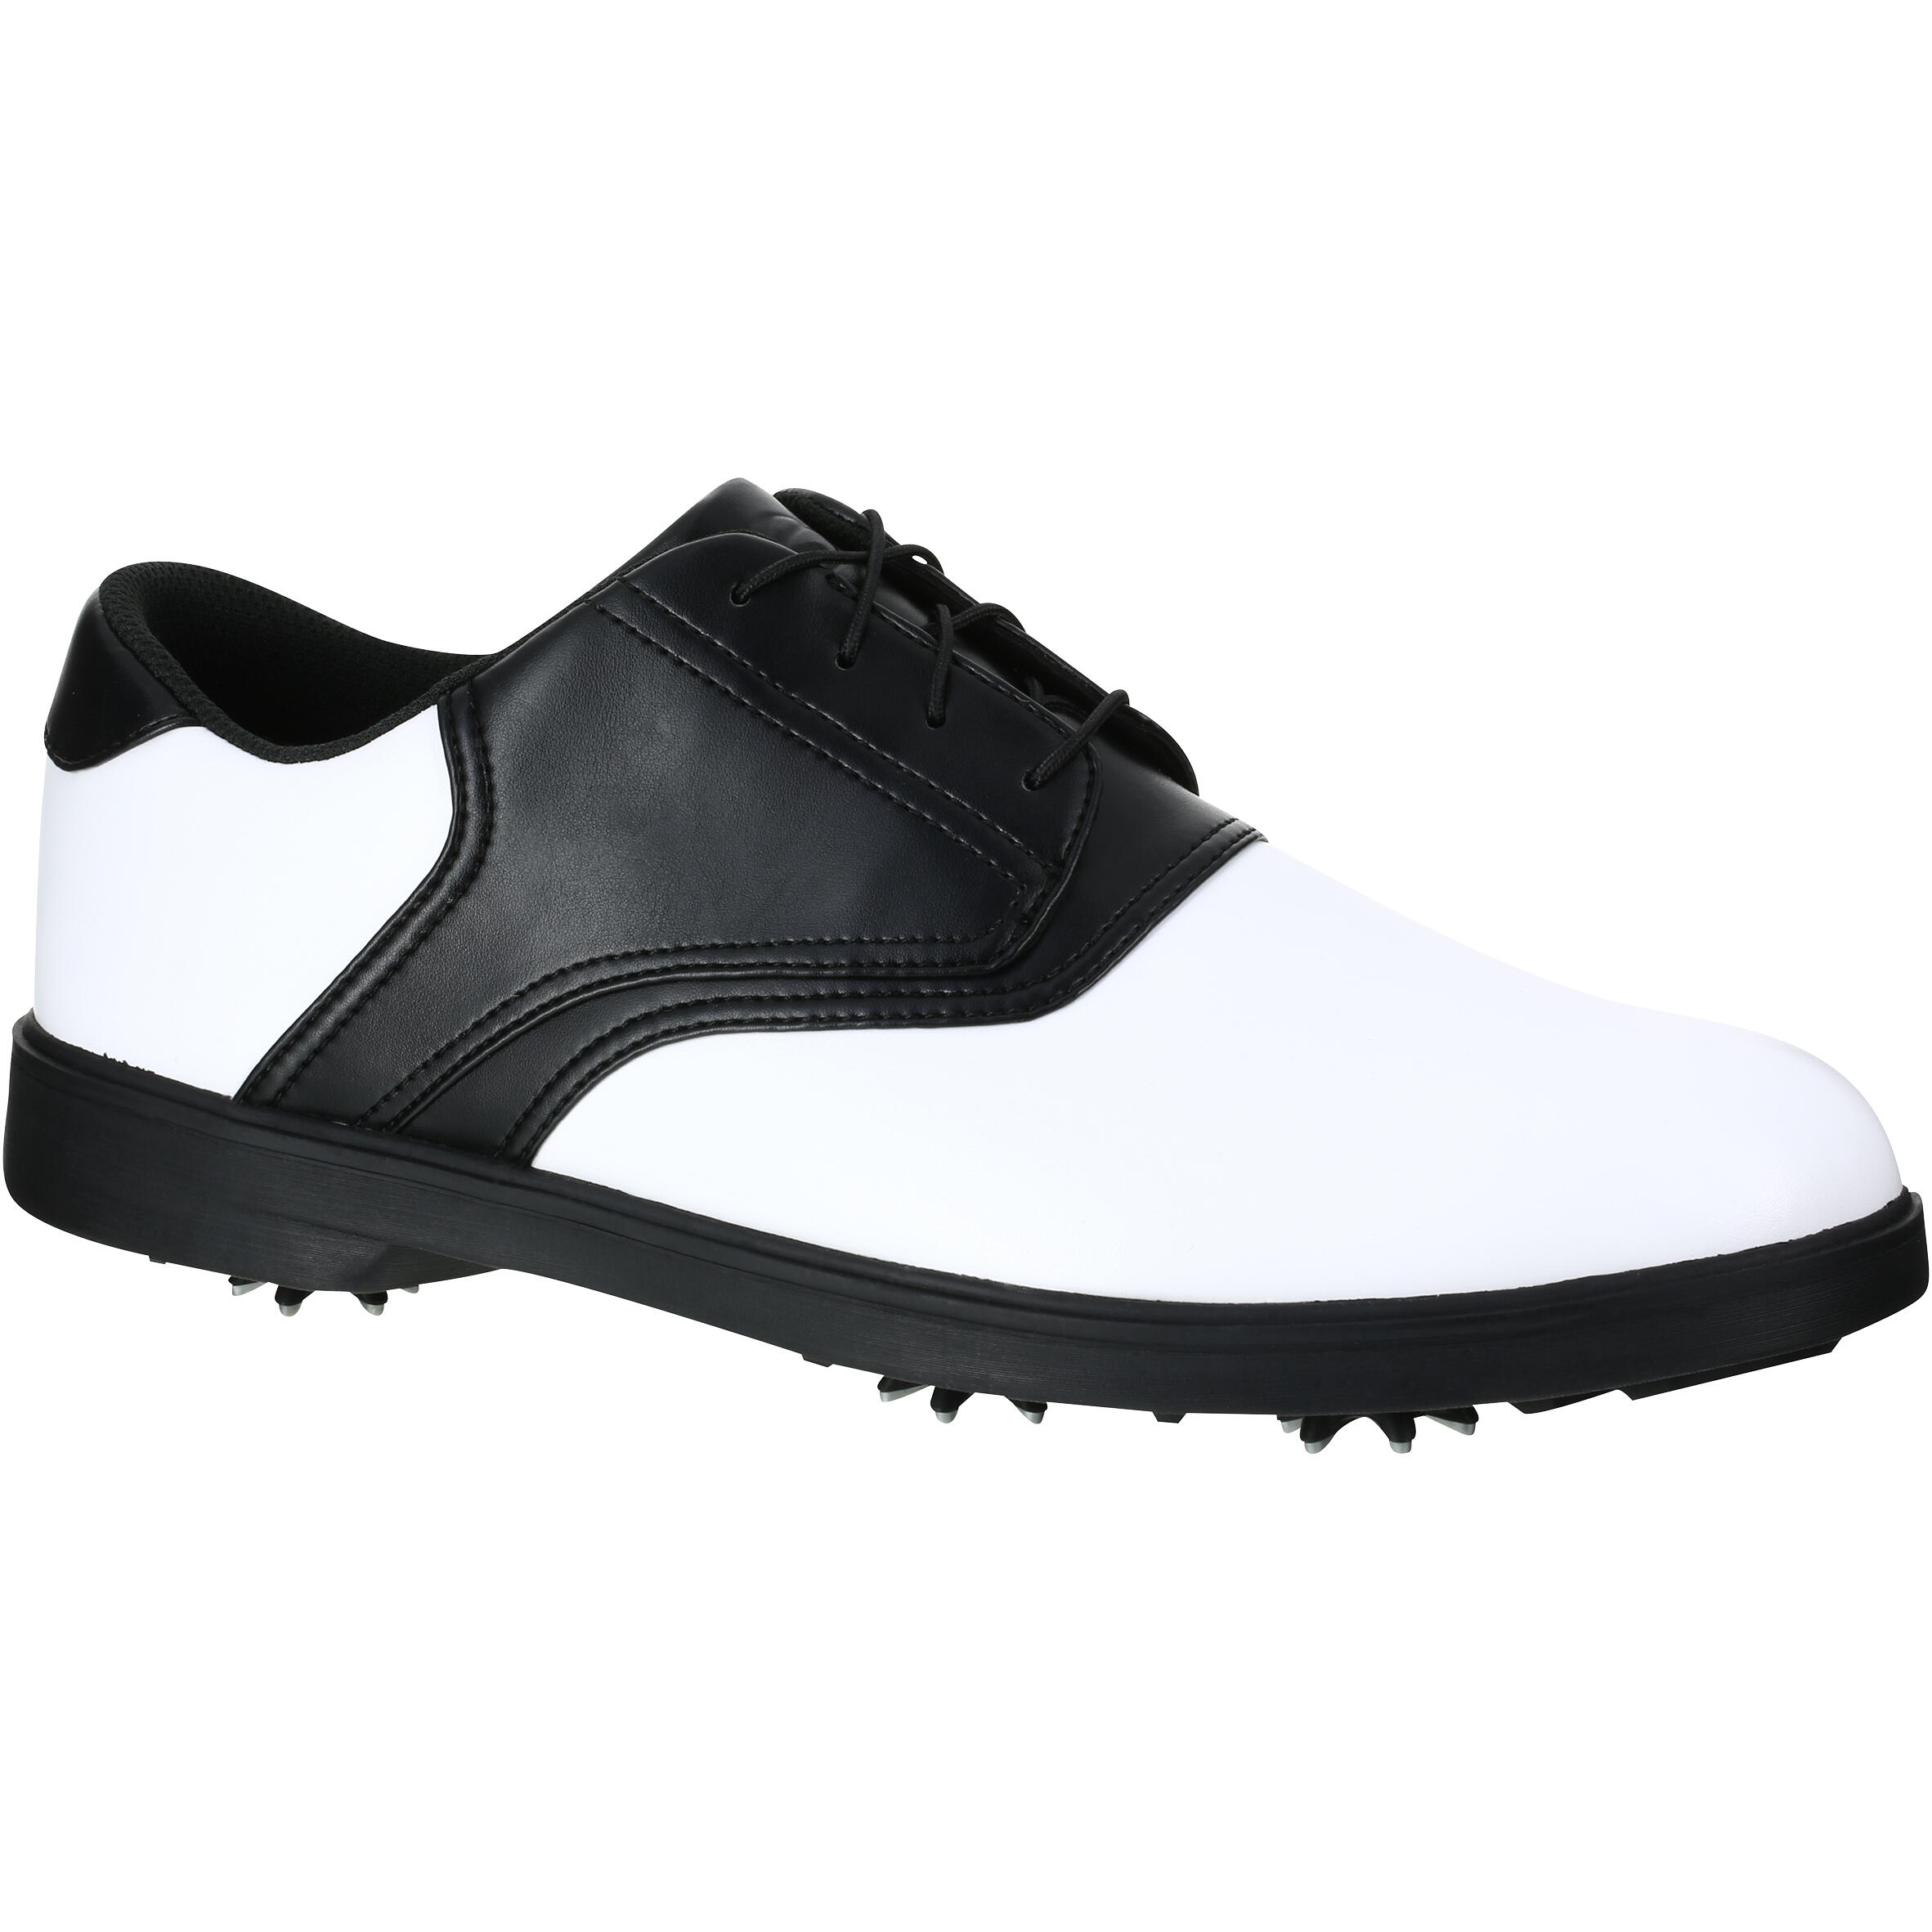 decathlon golf shoes